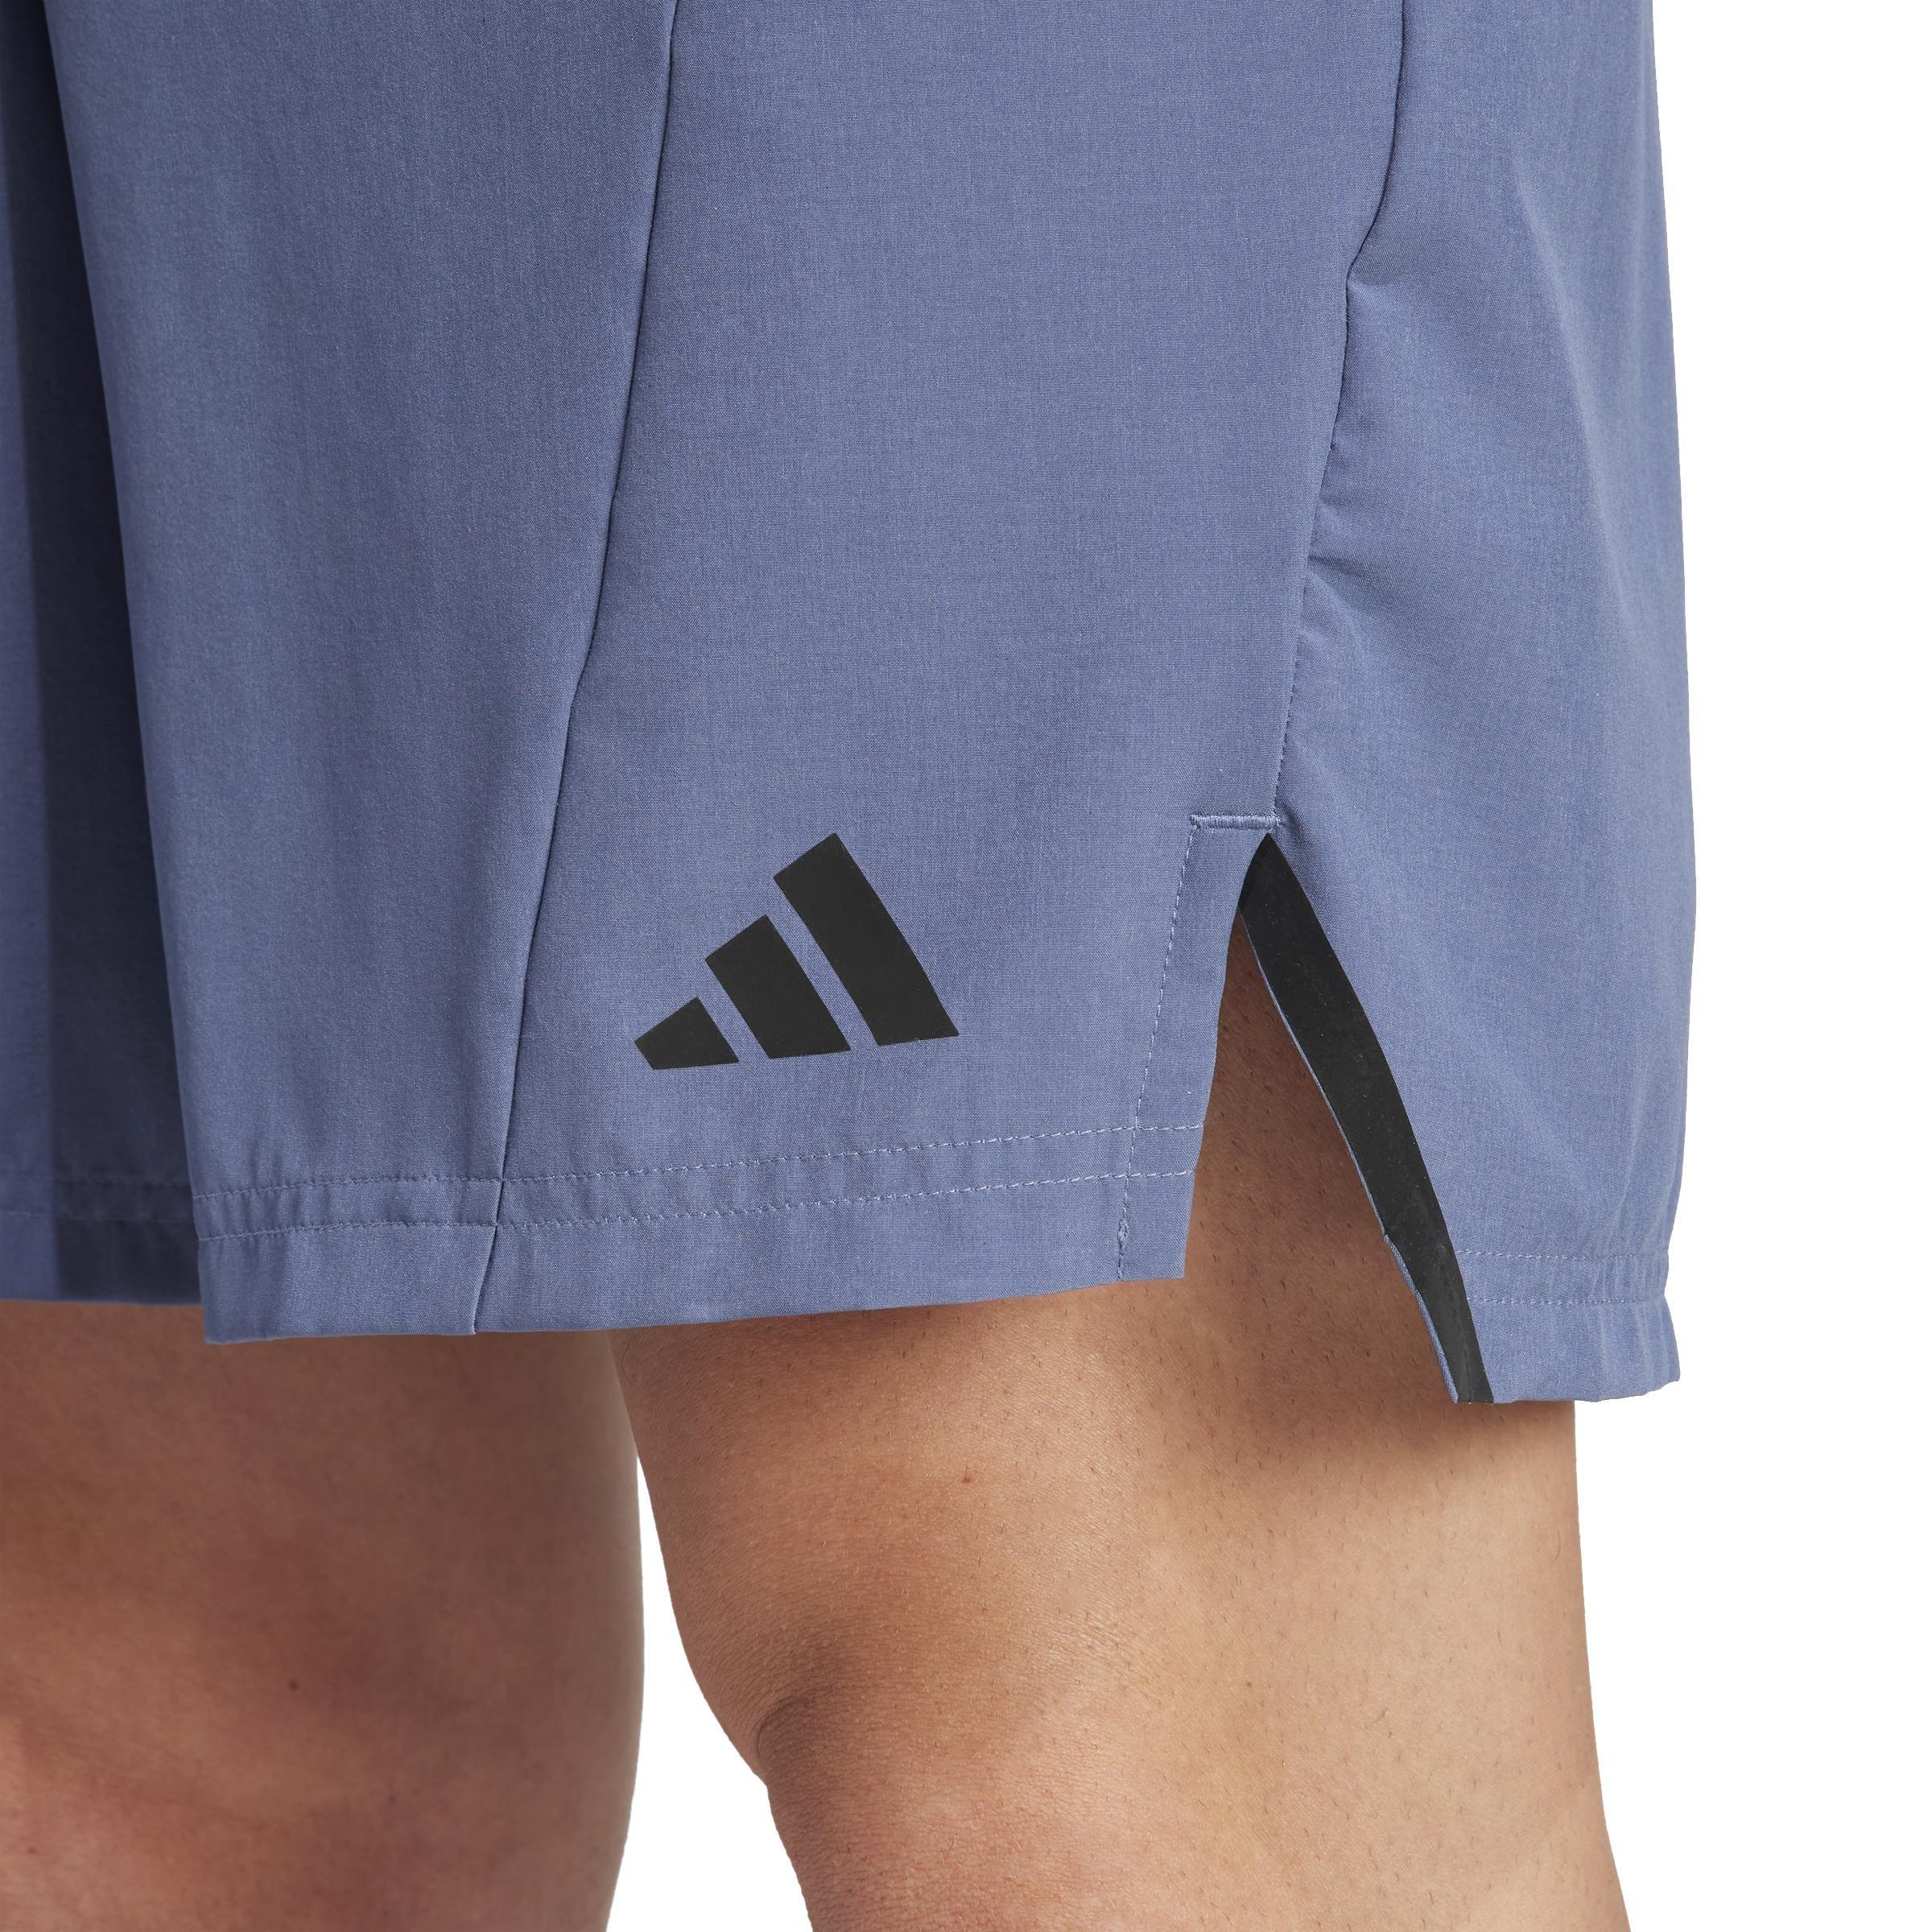 adidas - Men Designed For Training Workout Shorts, Blue